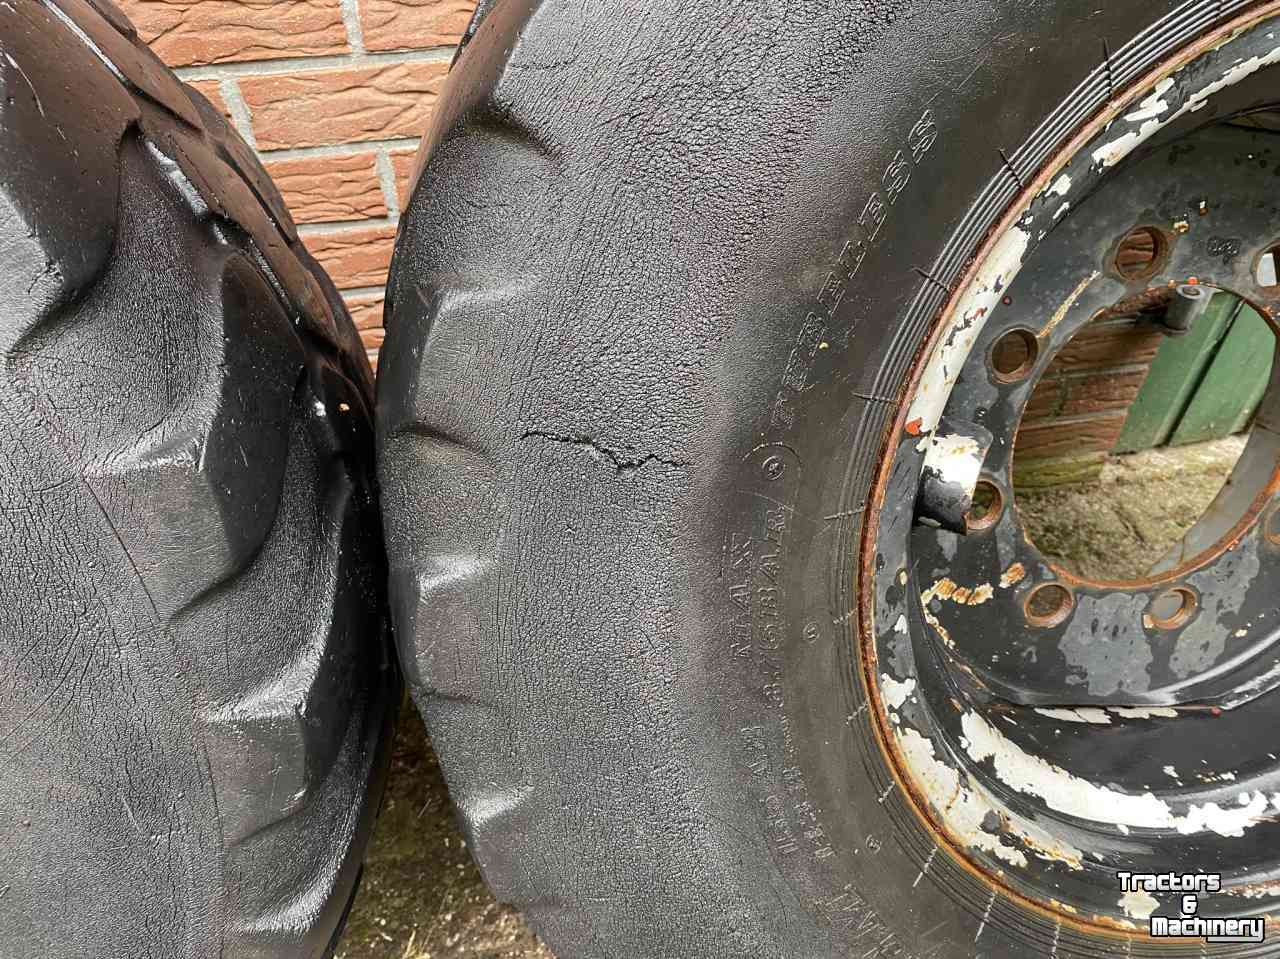 Wheels, Tyres, Rims & Dual spacers Dunlop 405/70 R20